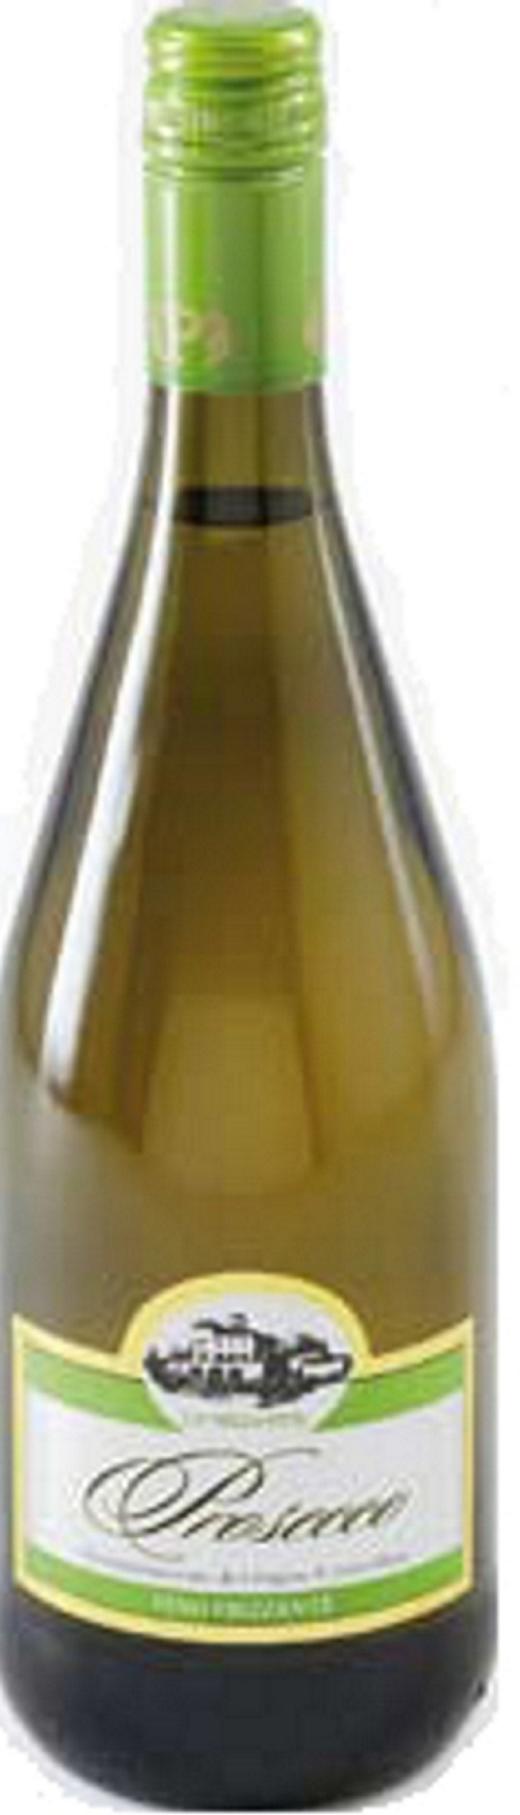 Weinshop morisco perlwein prosecco frizzante schraubverschluss parol vini